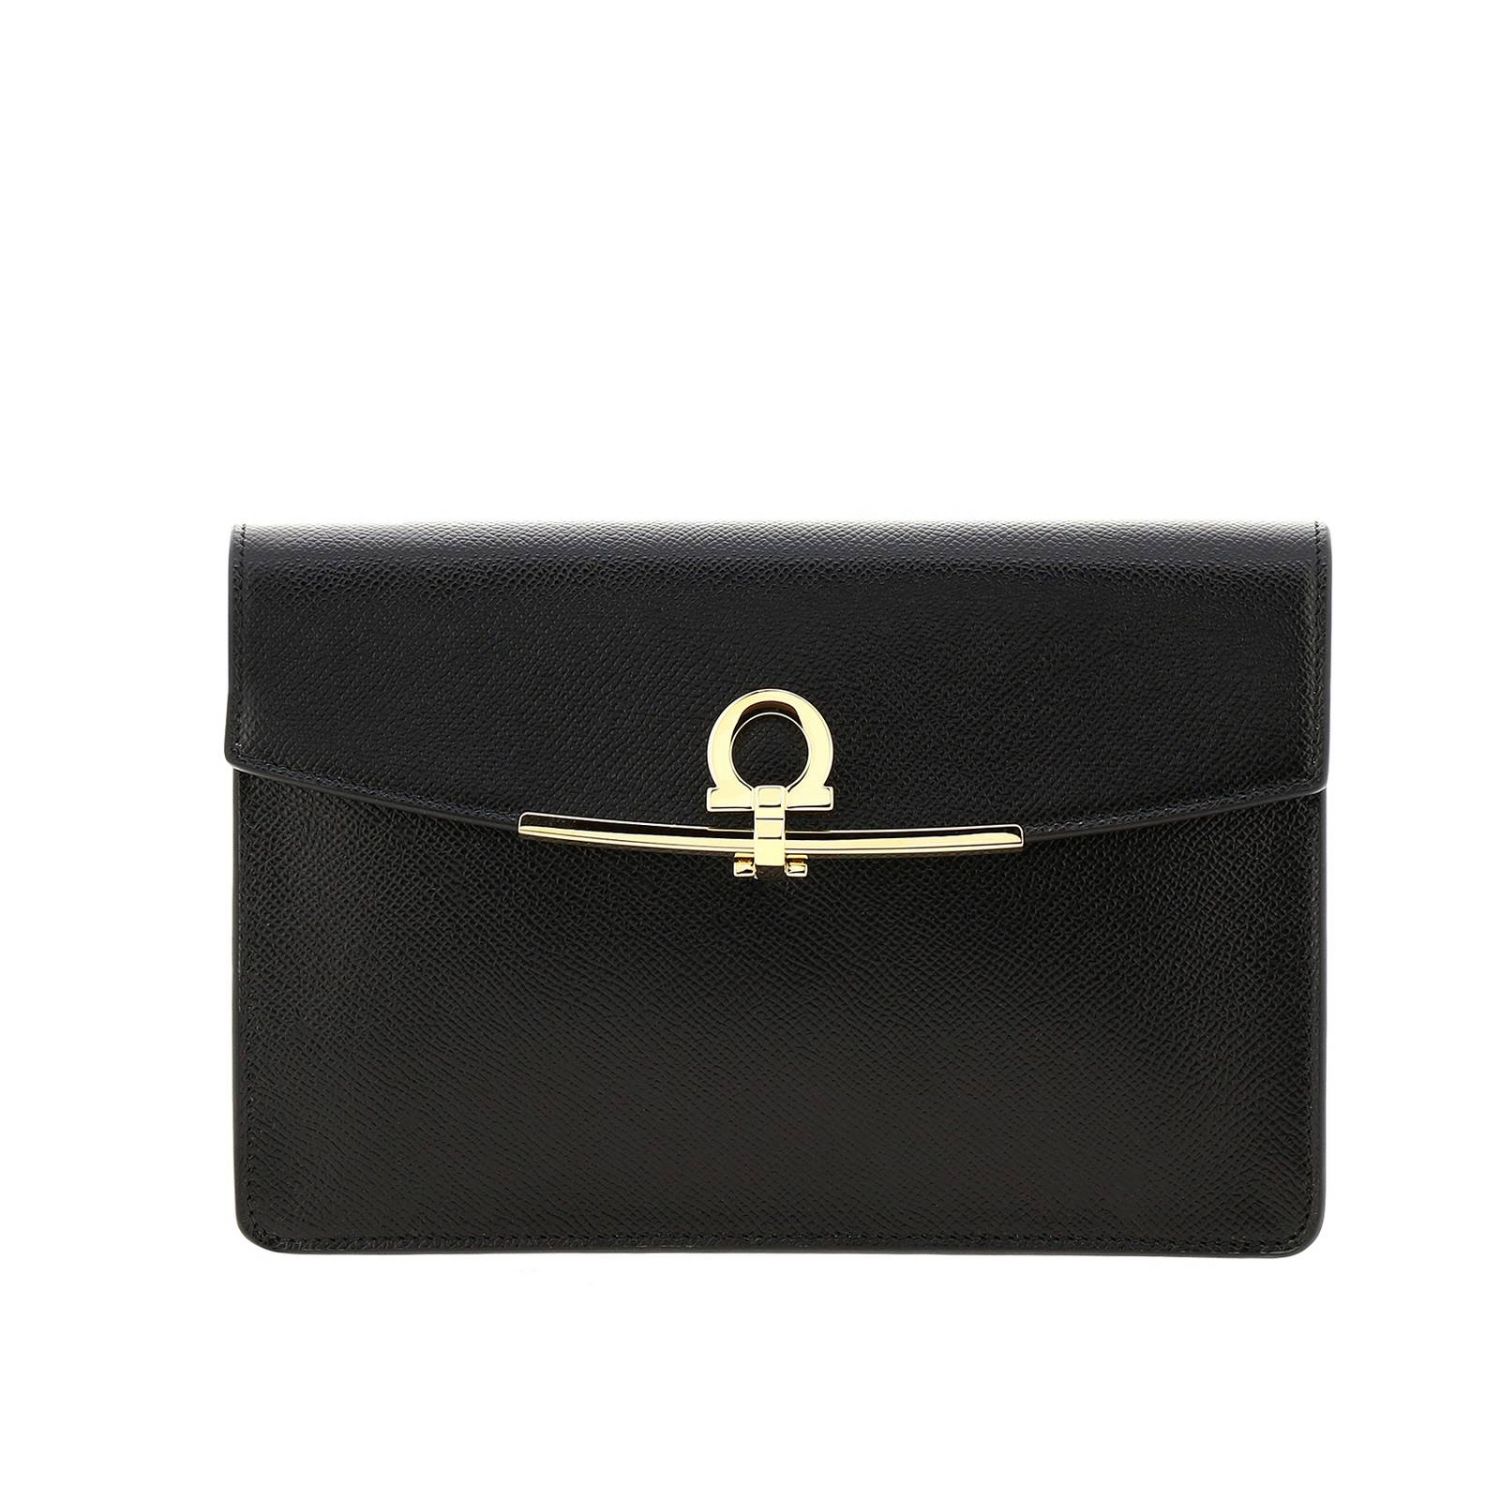 Salvatore Ferragamo Outlet: Clip bag in score leather by | Mini Bag ...